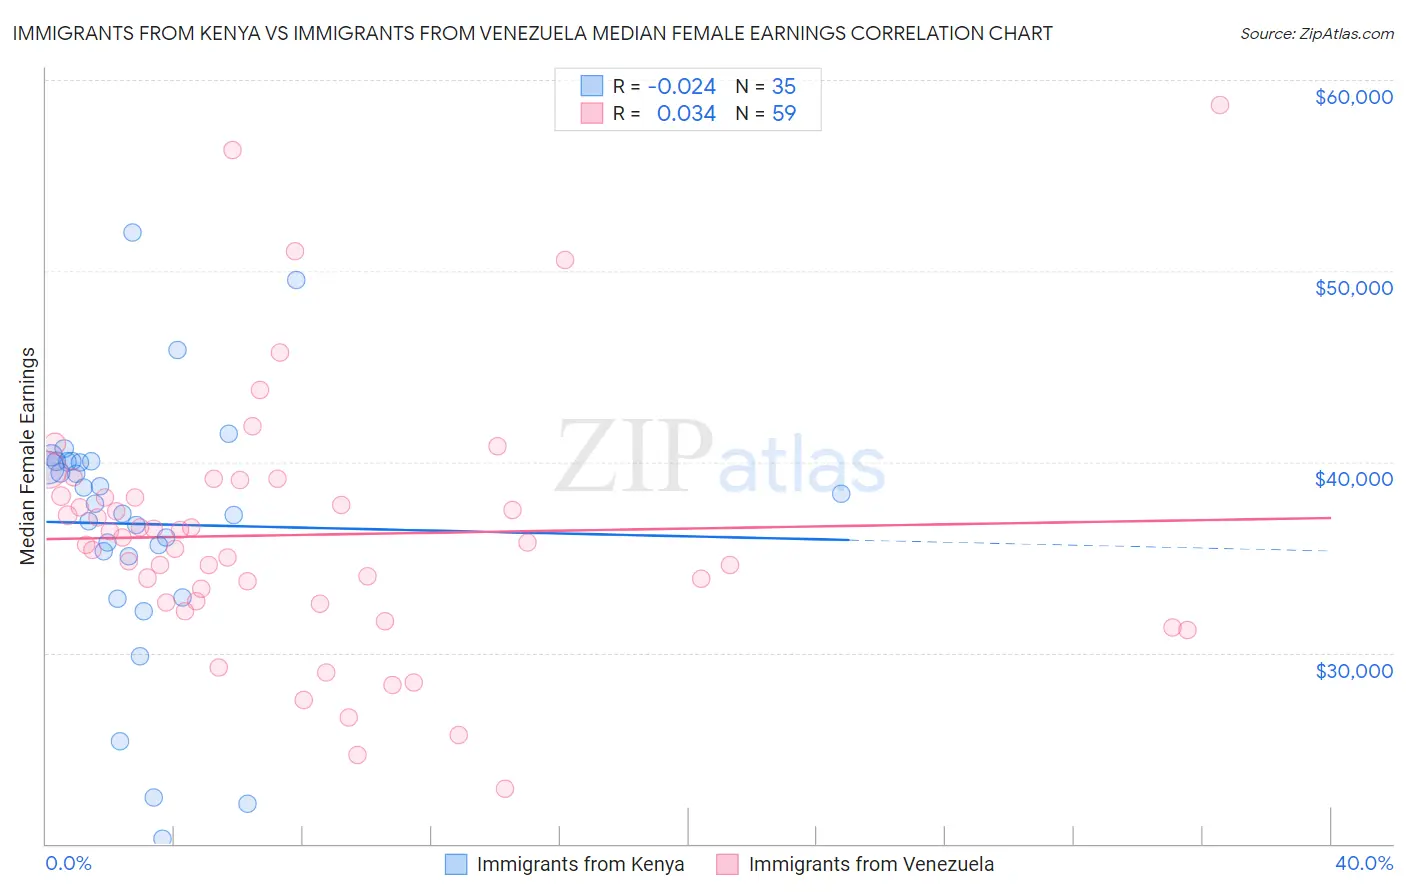 Immigrants from Kenya vs Immigrants from Venezuela Median Female Earnings